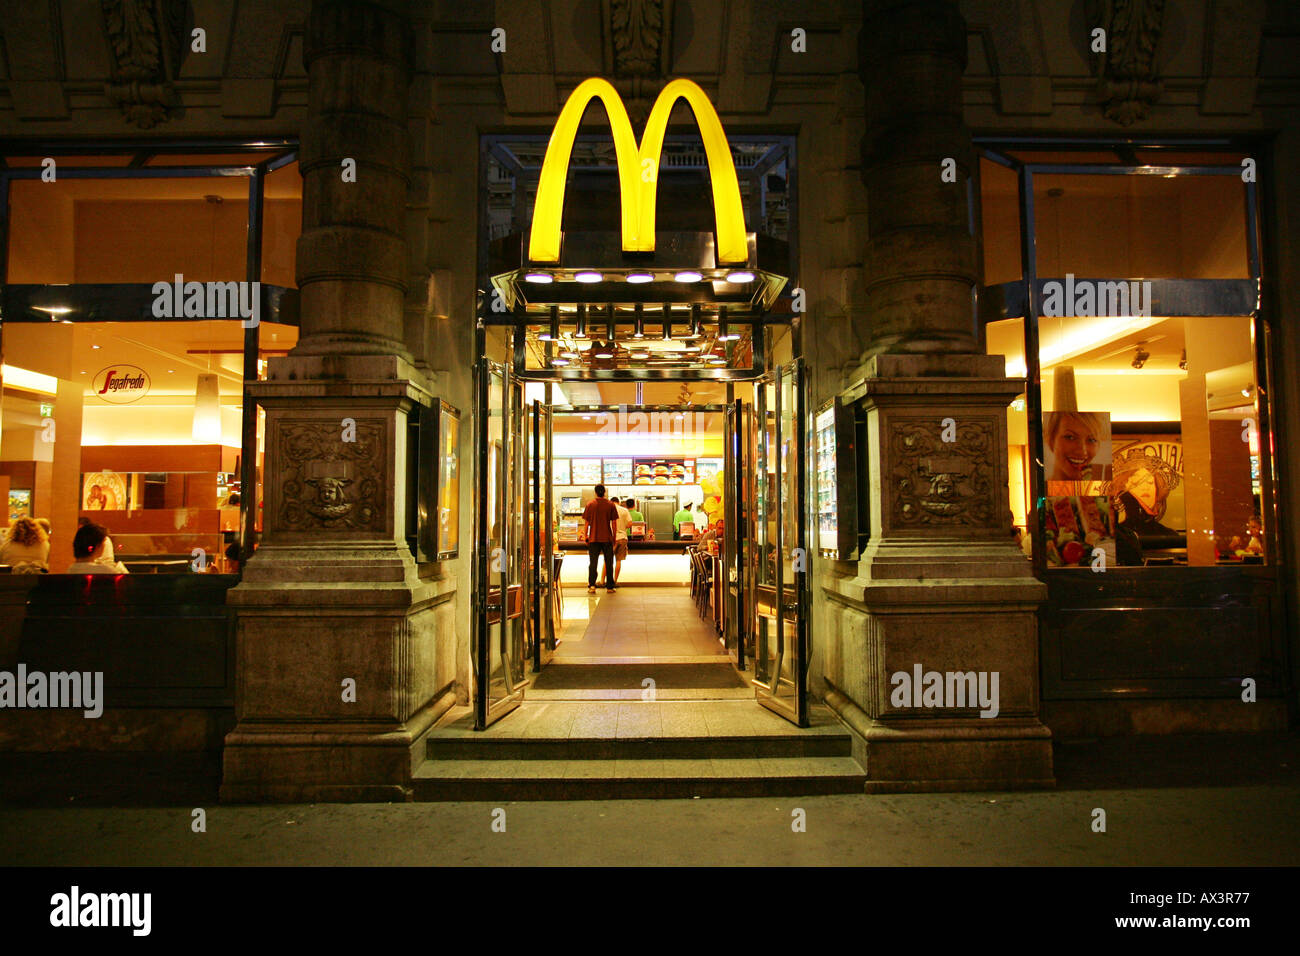 McDonald's restaurant in Vienna Stock Photo - Alamy